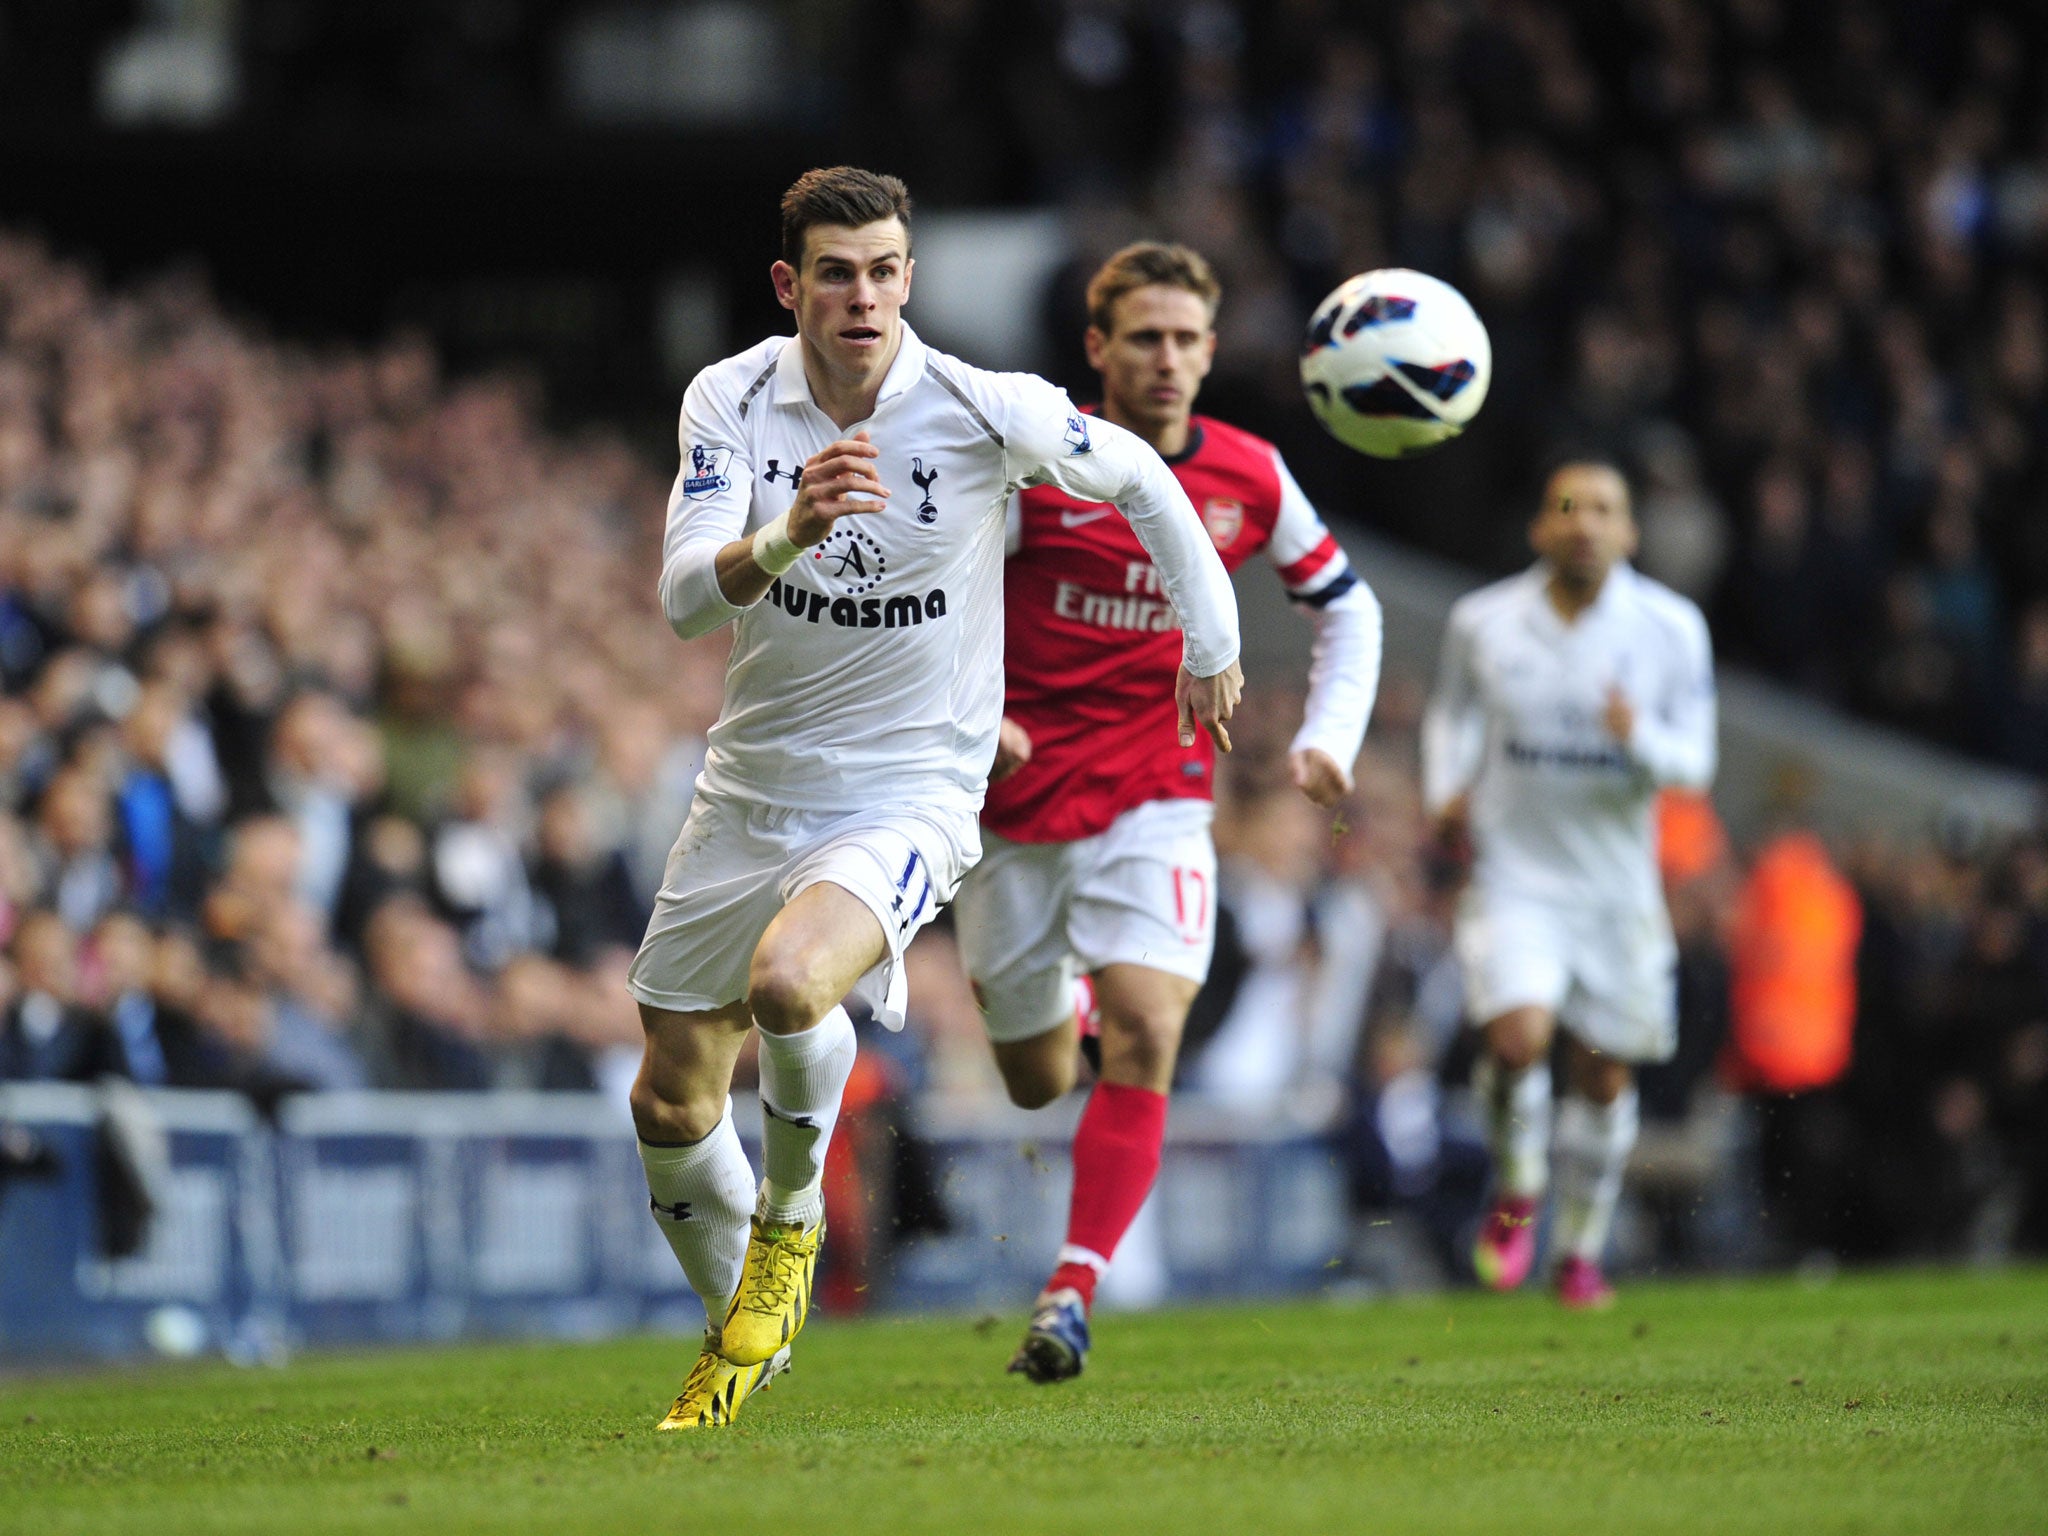 Tottenham Hotspur's Welsh midfielder Gareth Bale (L) chases the ball